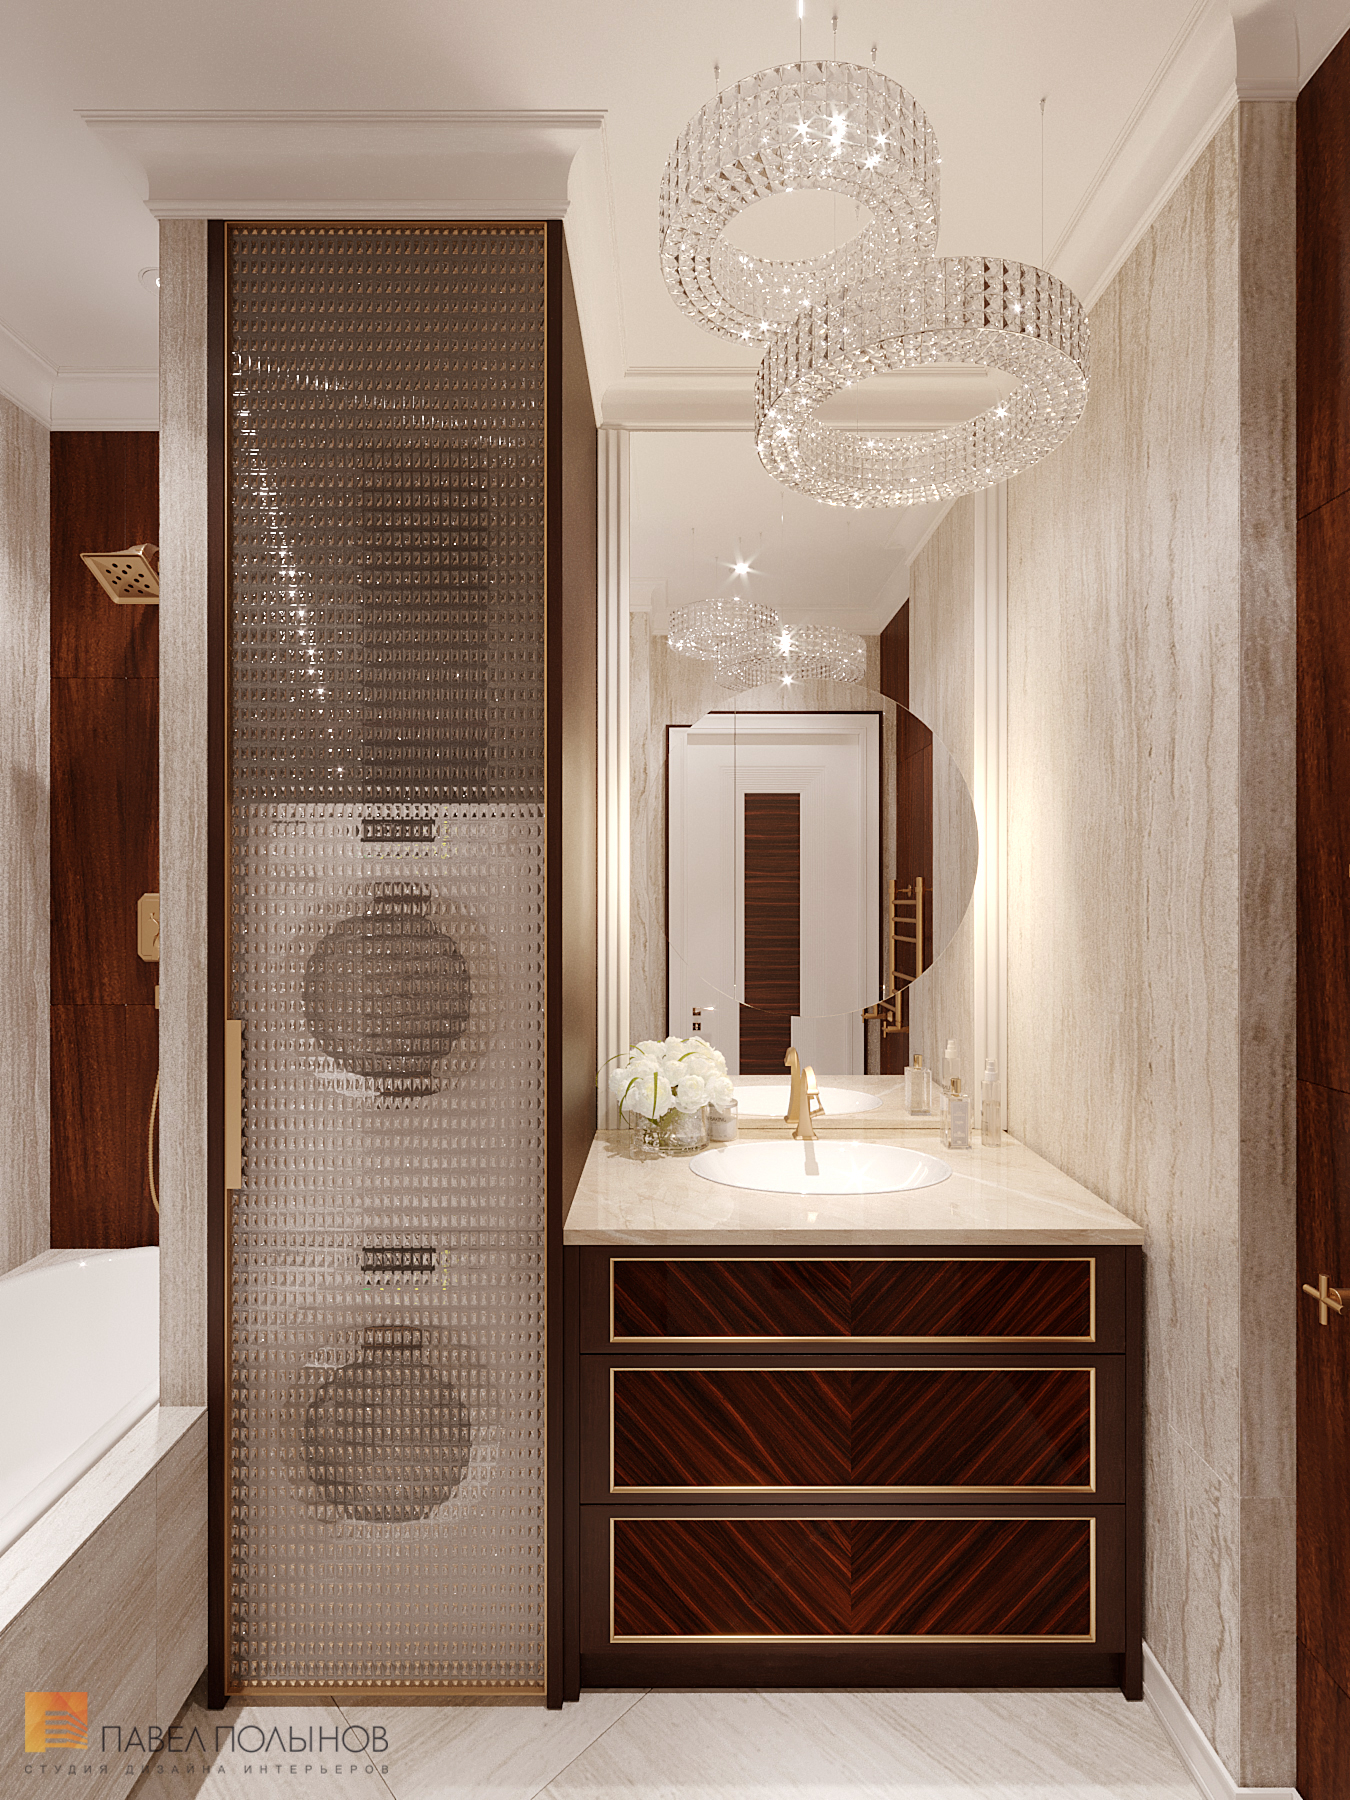 Фото интерьер ванной комнаты из проекта «Интерьер квартиры в стиле неоклассики с элементами ар-деко, ЖК «Rich Art Club», 75 кв.м.»